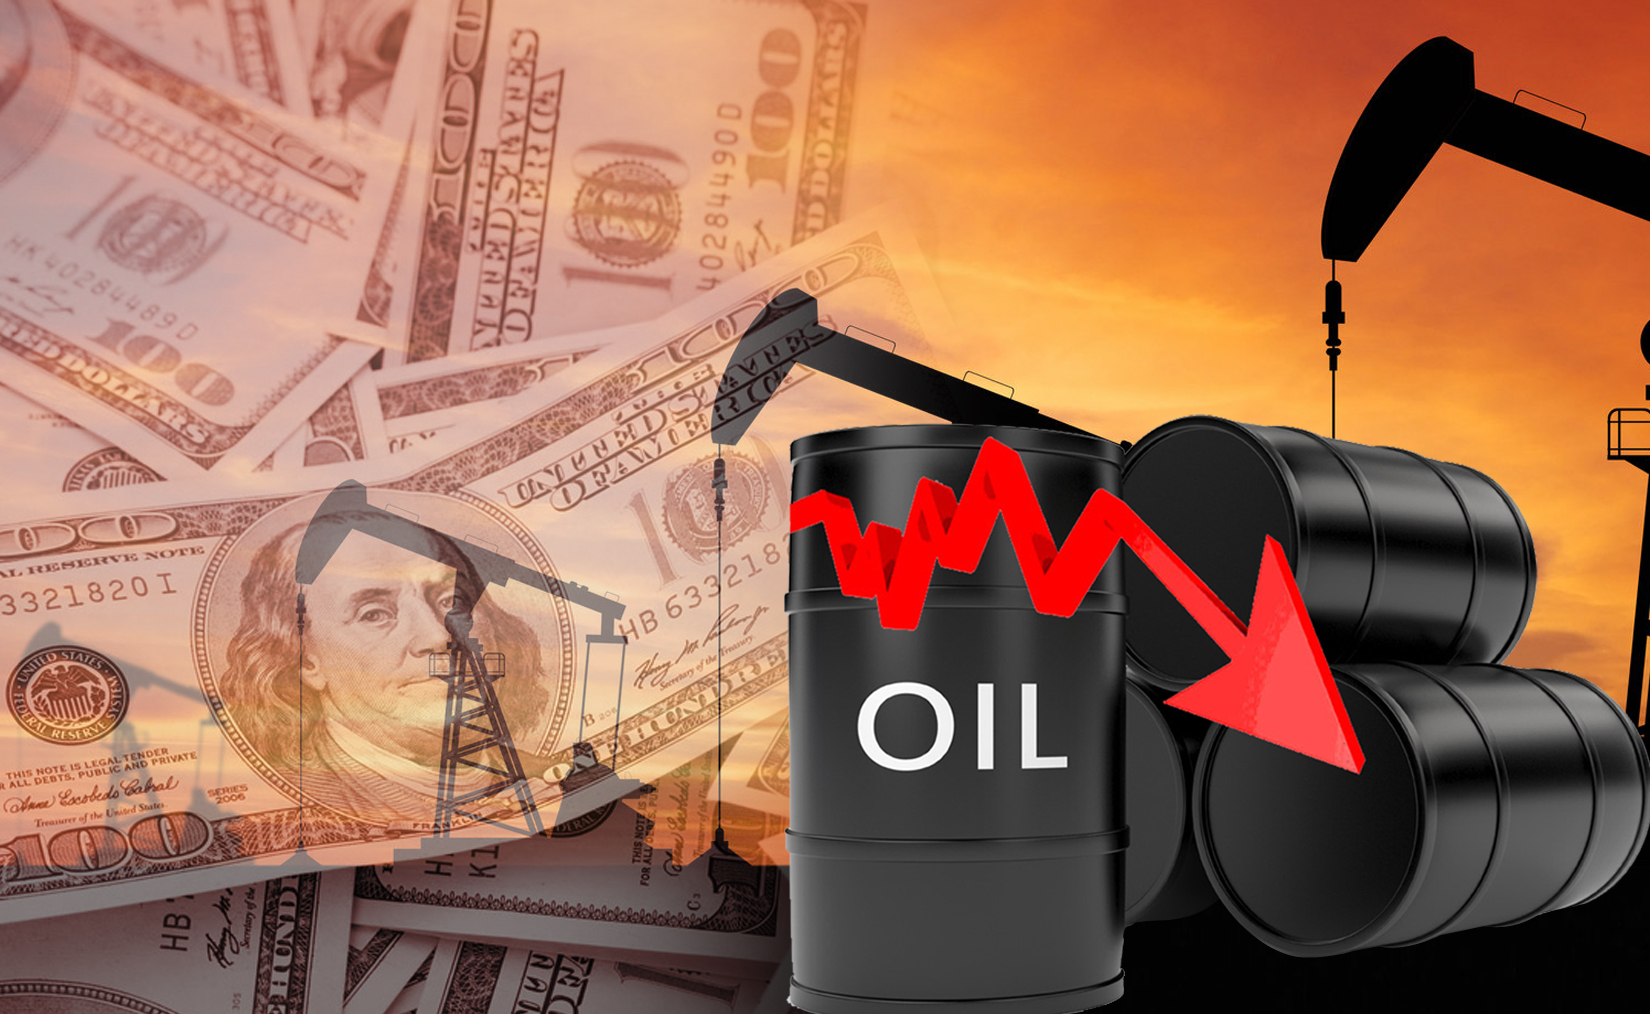 Kuwait oil price down 97 cents to USD 43.69 pb                                                                                                                                                                                                            